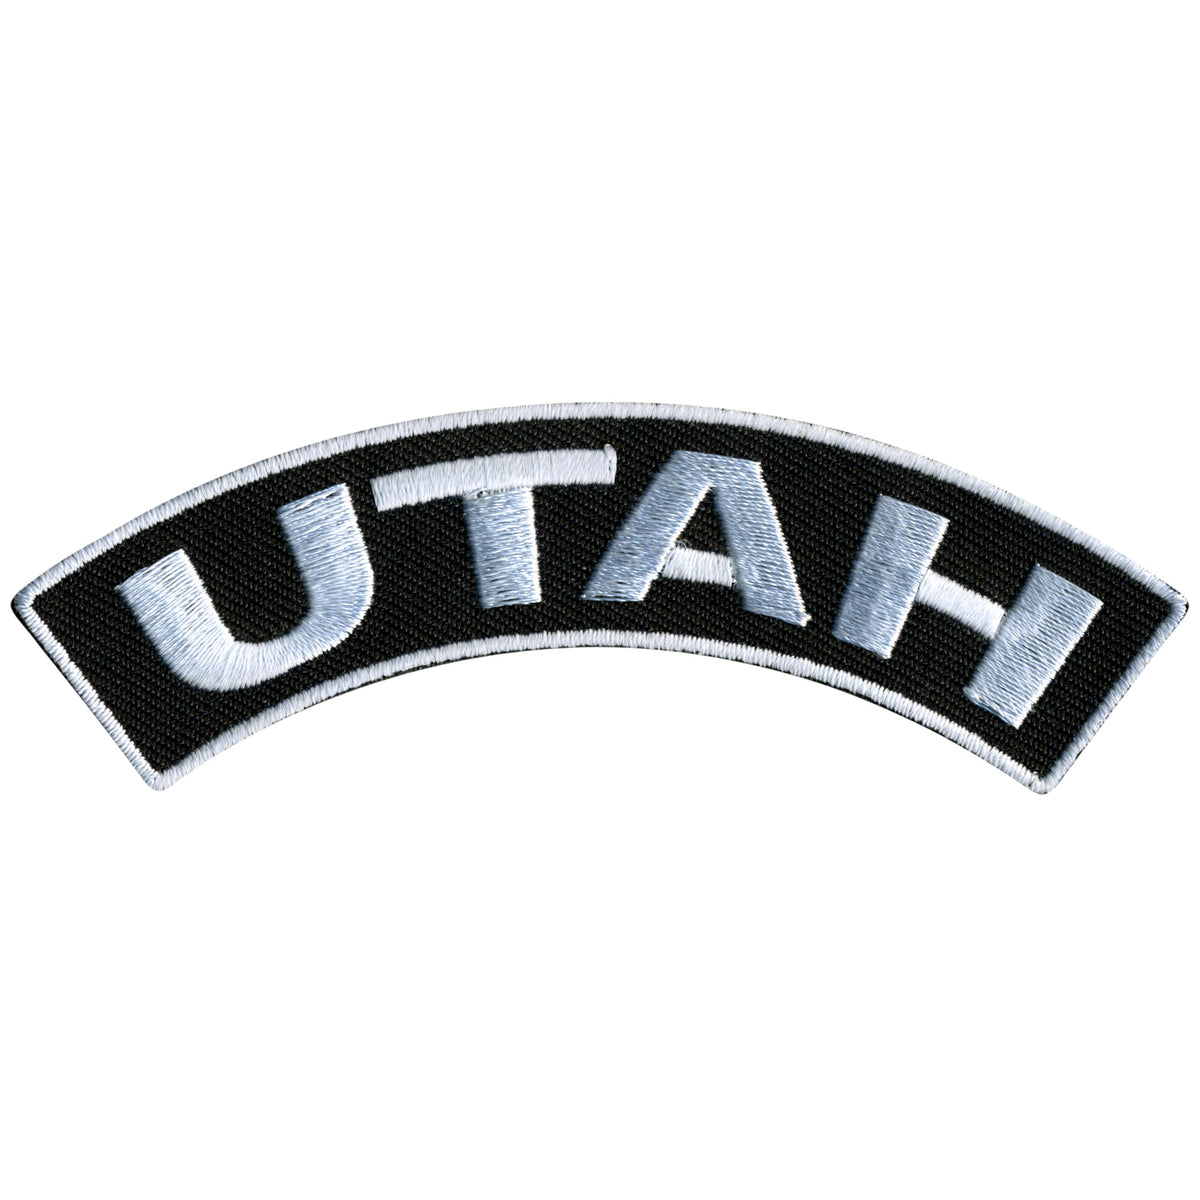 Hot Leathers Utah 4” X 1” Top Rocker Patch